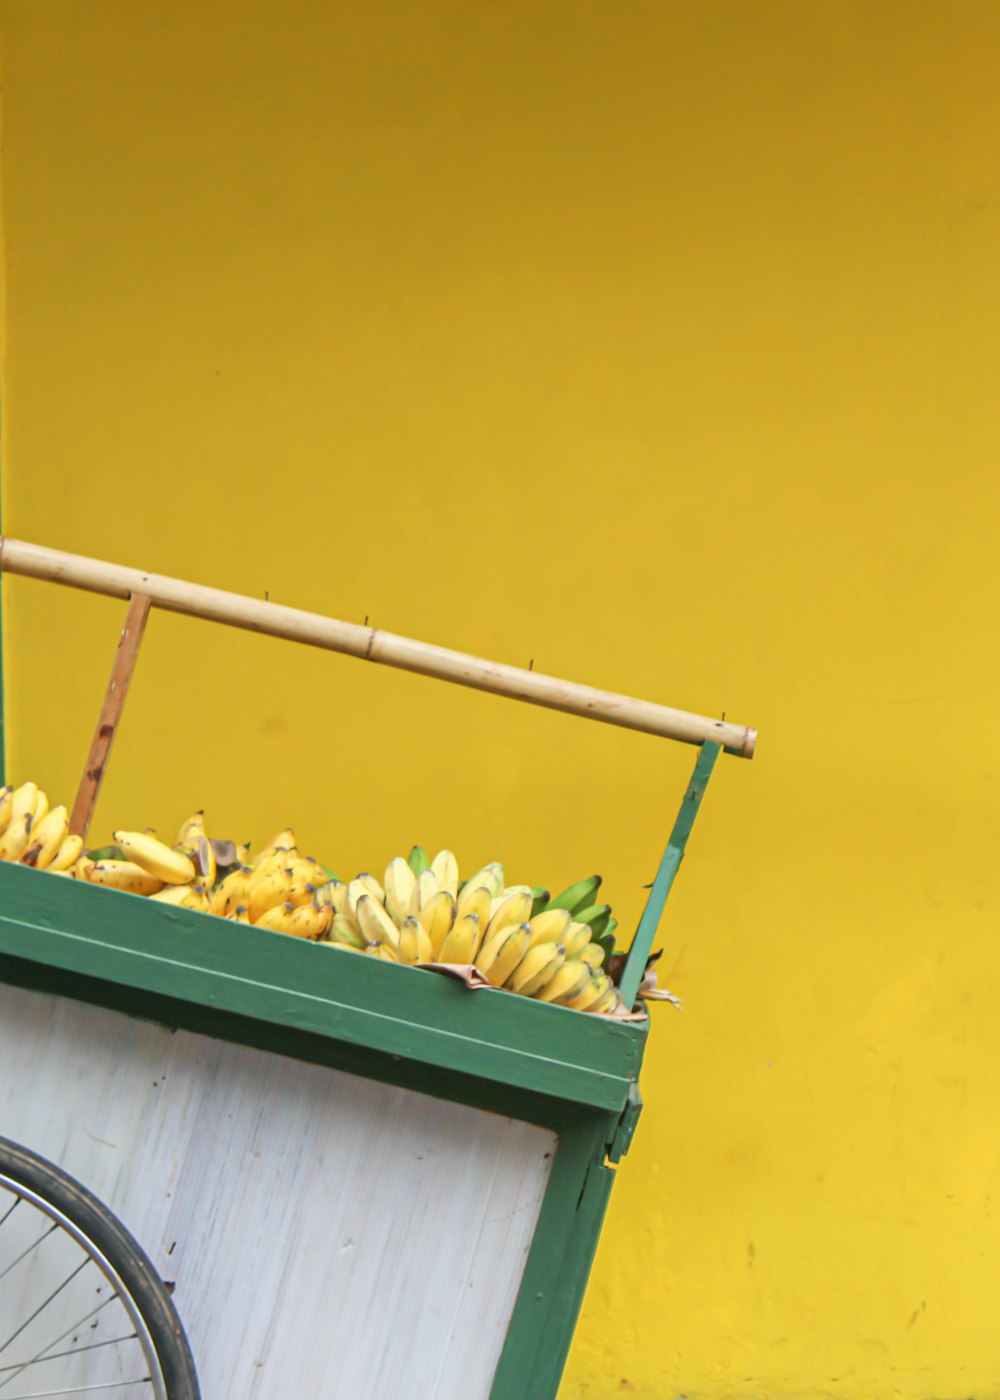 yellow banana fruit on green wooden wall